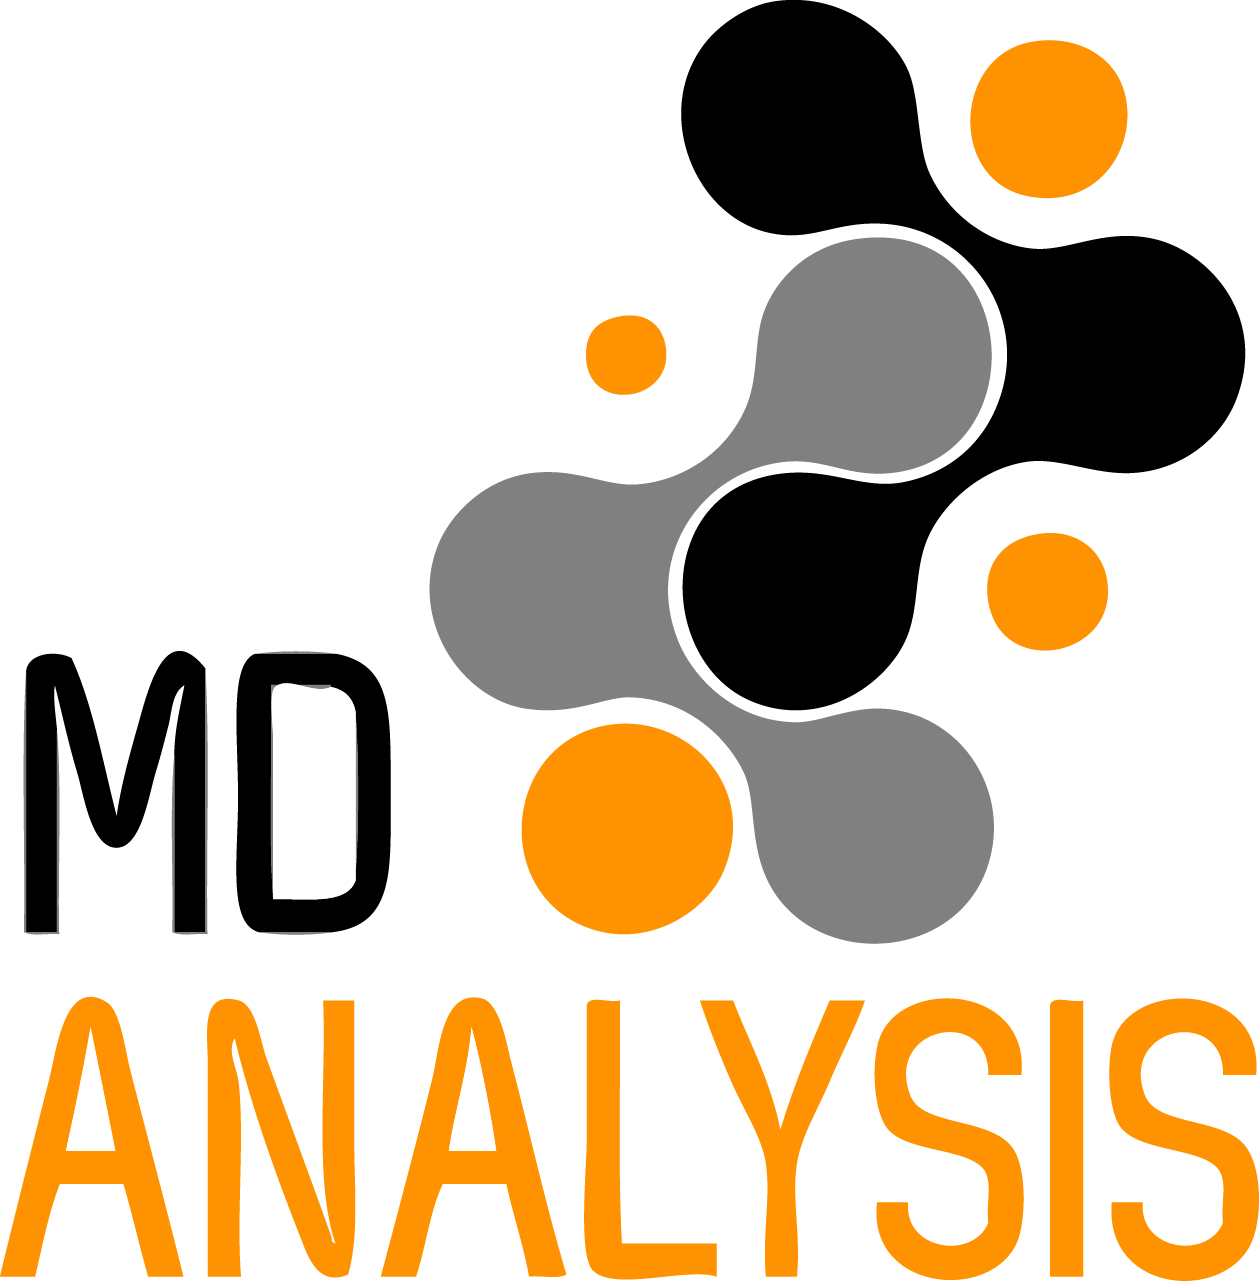 http://www.mdanalysis.org/public/mdanalysis-logo_square.png